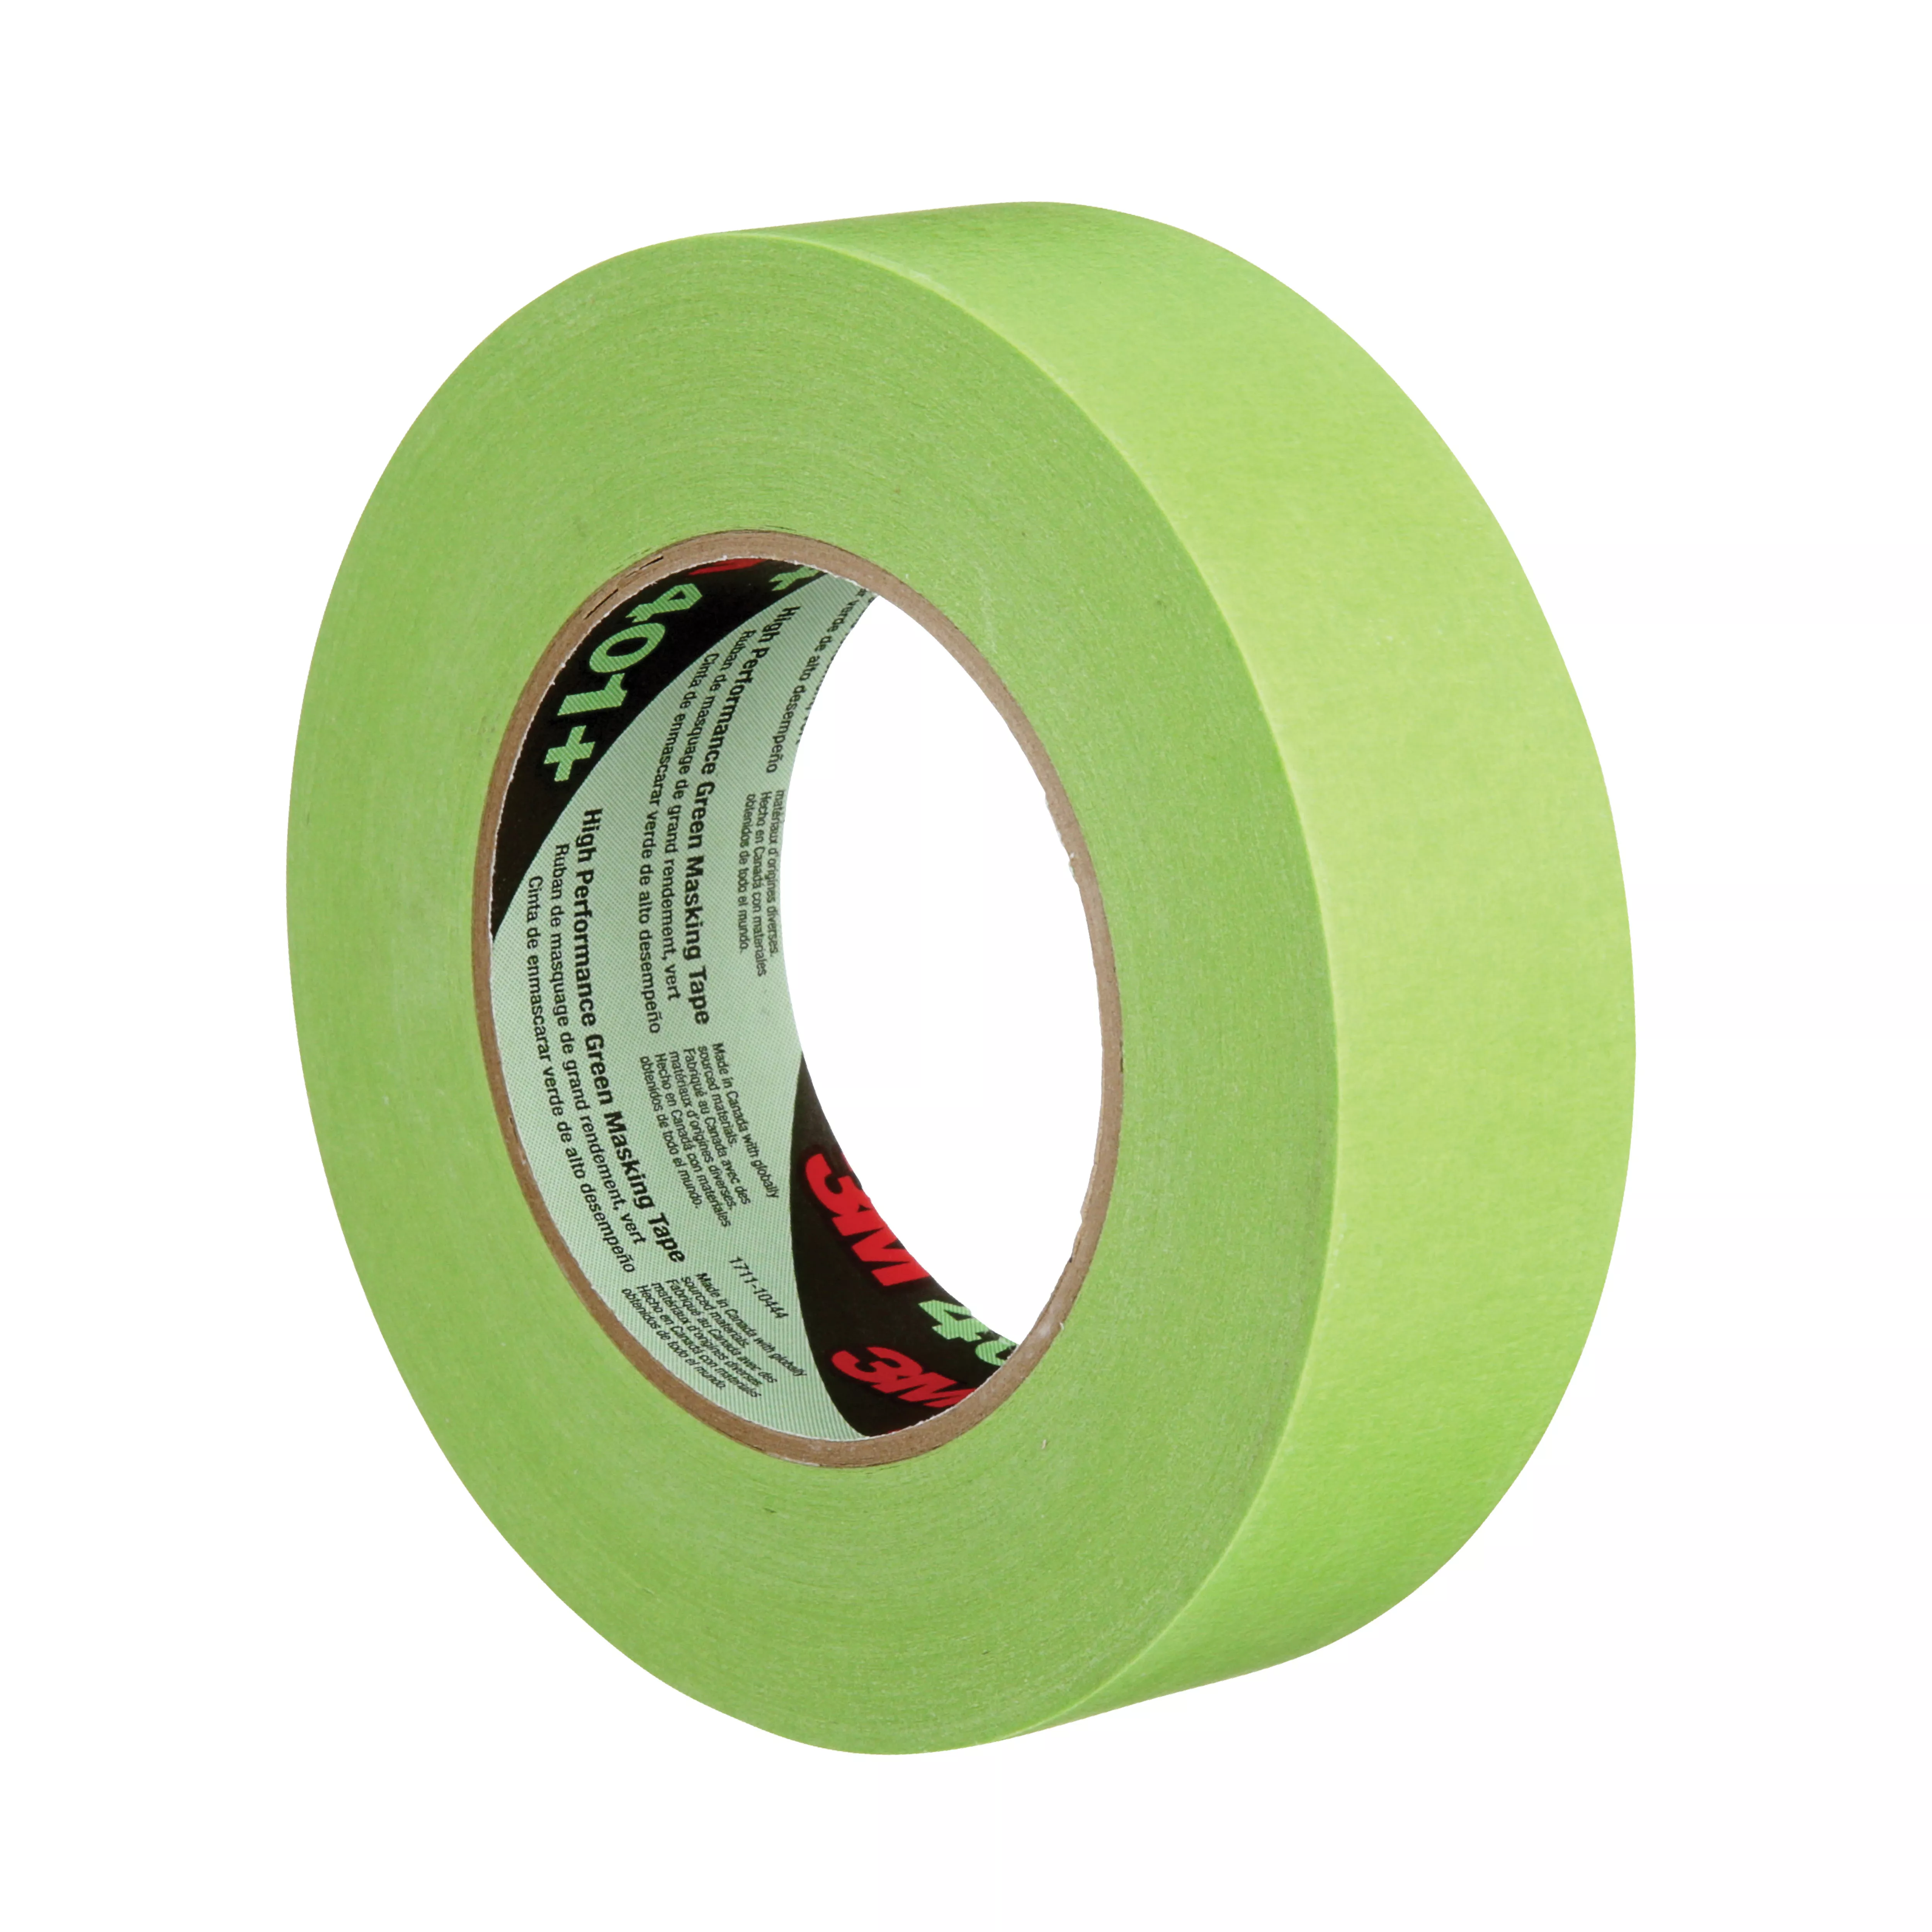 3M™ High Performance Green Masking Tape 401+, 36 mm x 55 m 6.7 mil, 16
Roll/Case